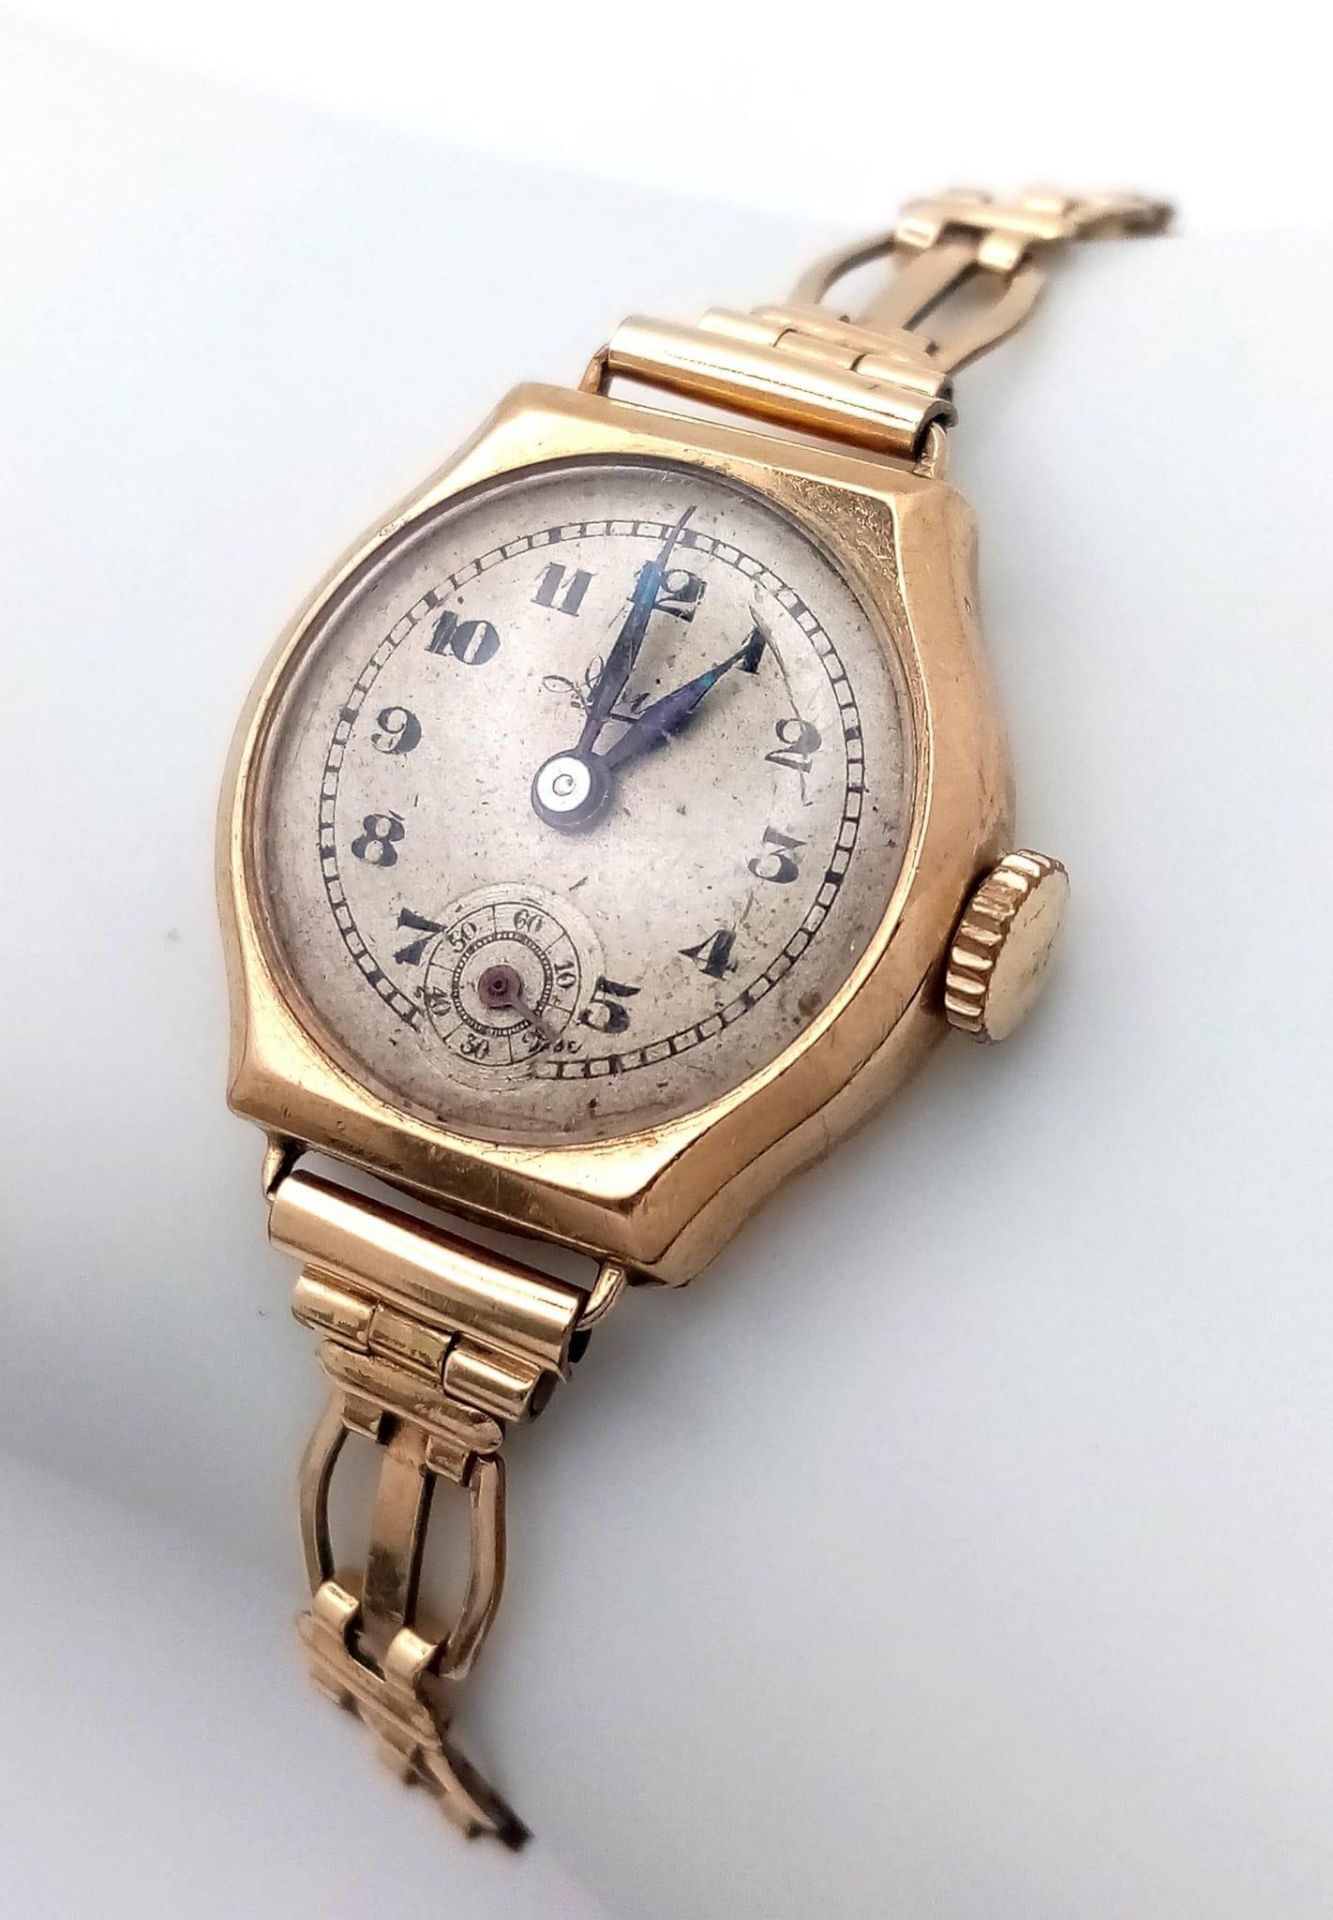 A Vintage 9K Gold Avia Ladies Watch. Yellow metal bracelet. 9K gold case - 21mm. 15.4g total weight.